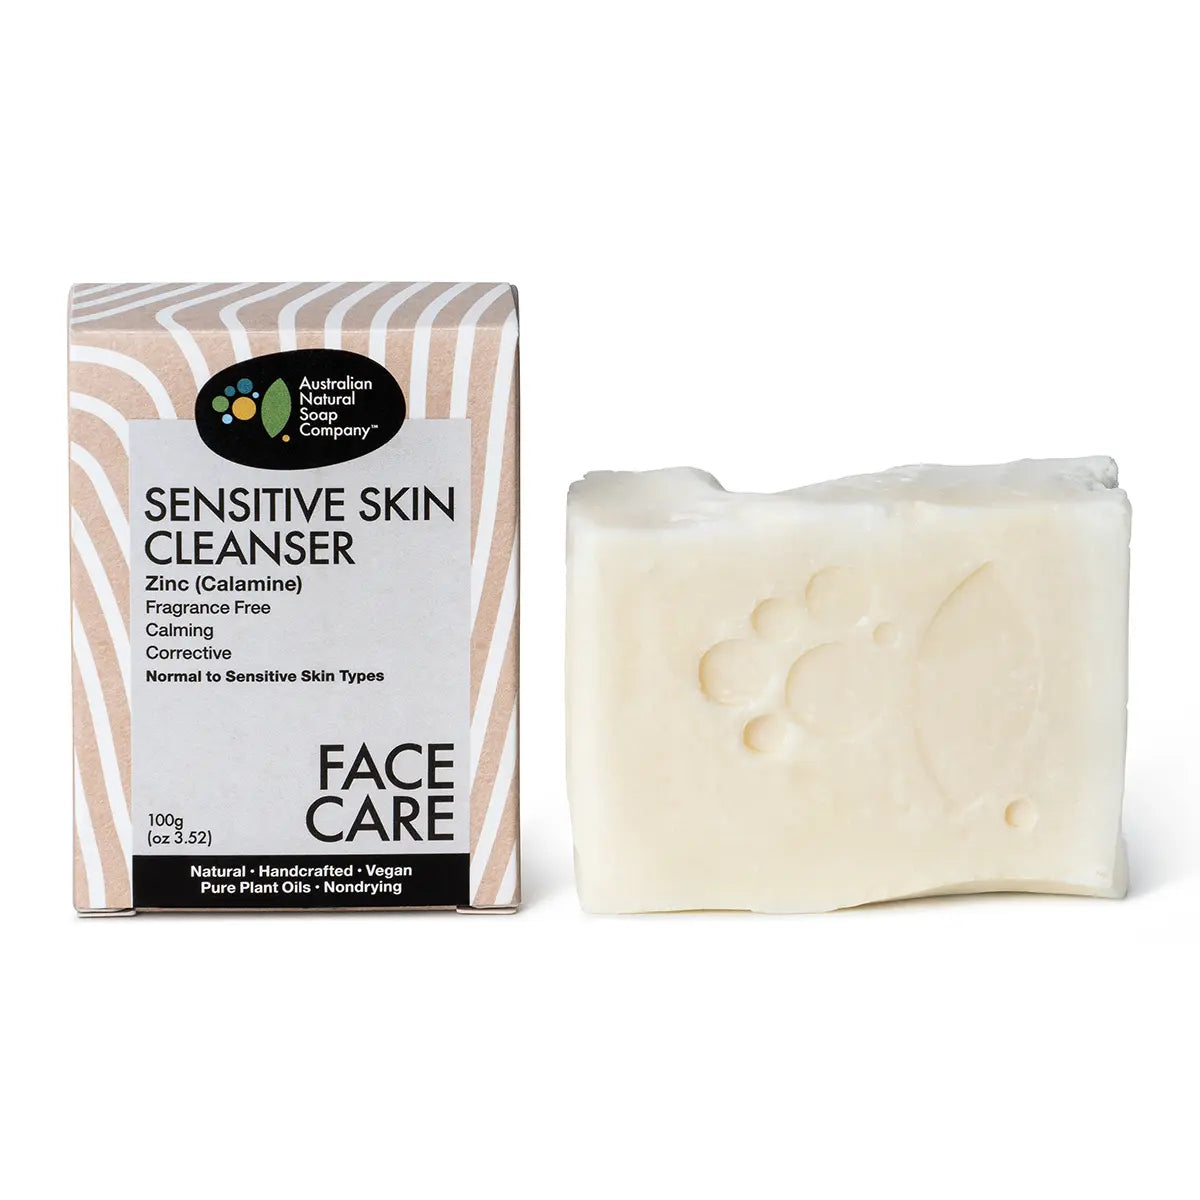 Australian Natural Soap Company Sensitive Skin Facial Cleanser - Zinc (Calamine)-The Living Co.